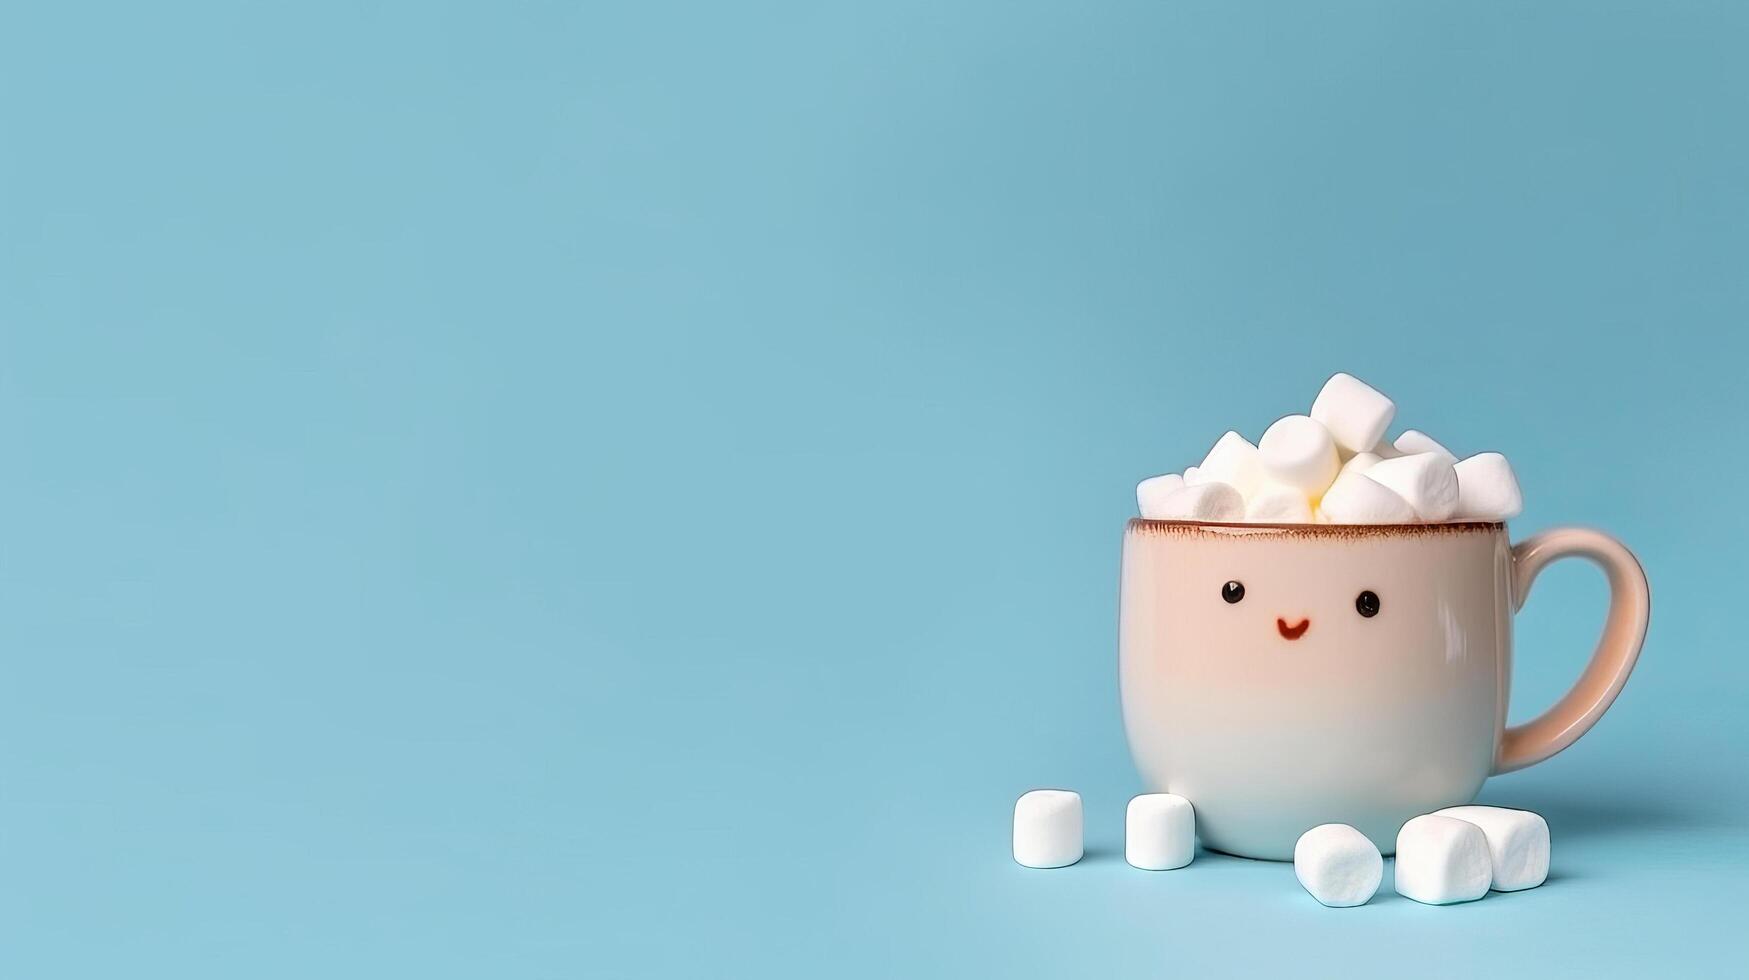 Hot chocolate mug with melted marshmallows snowman Illustration photo